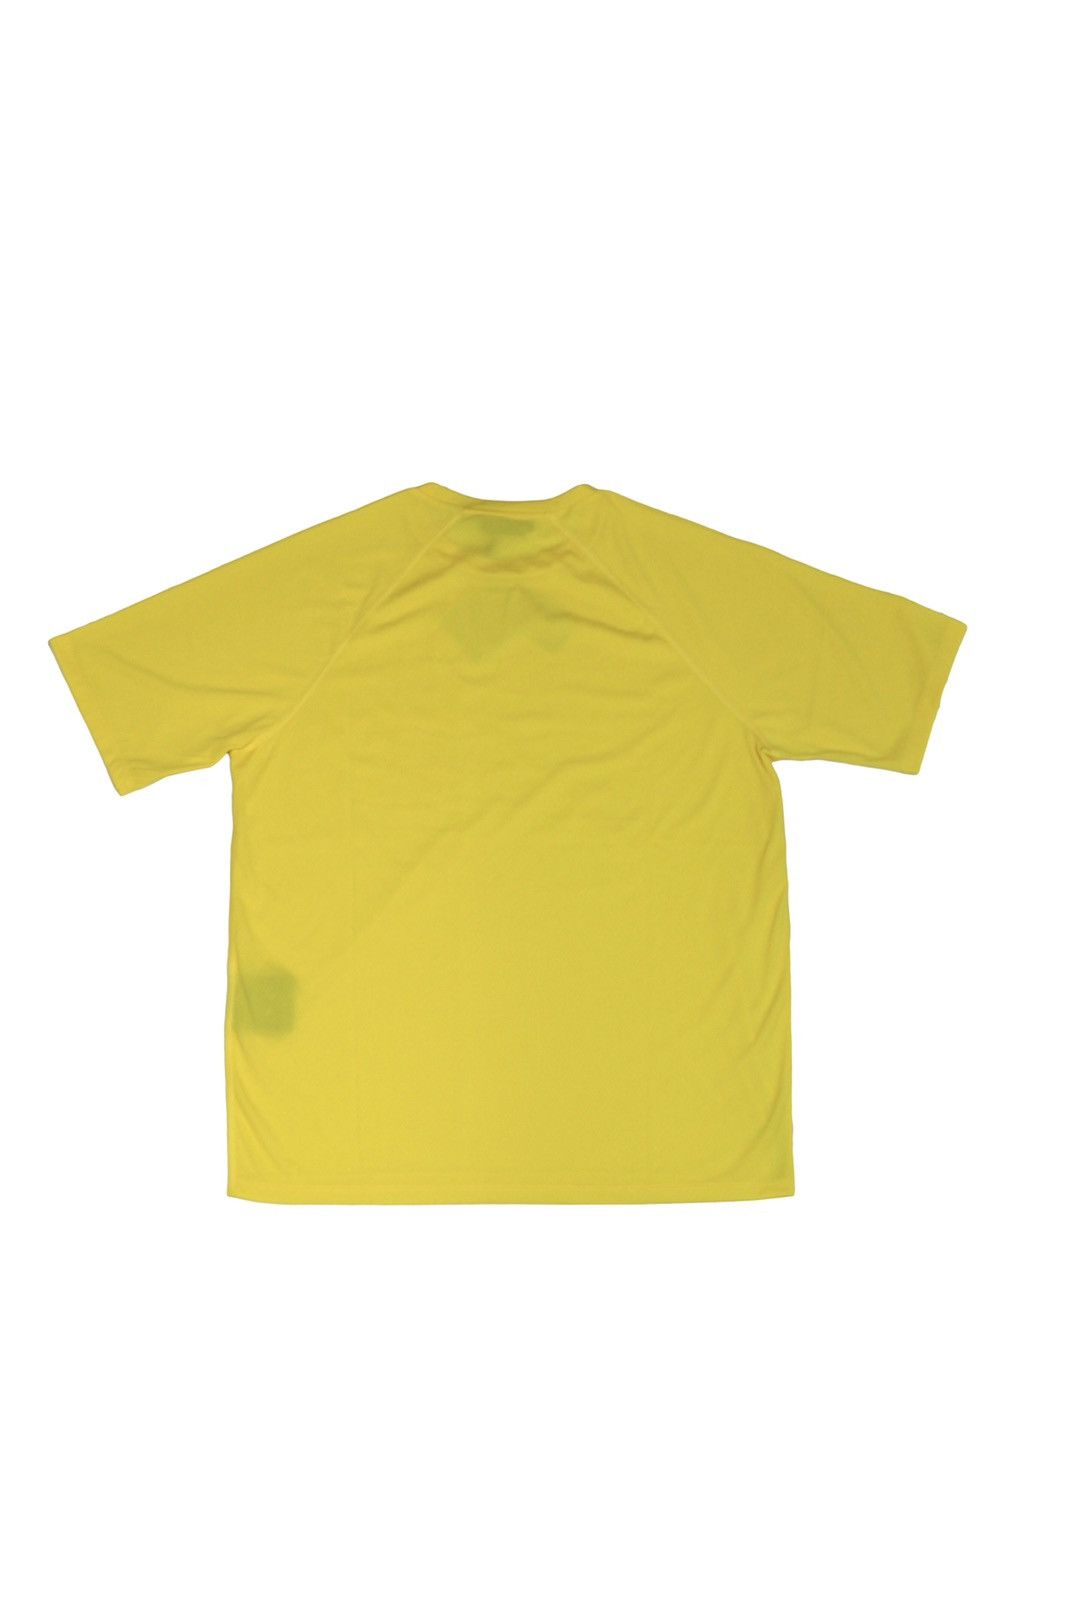 Prada Prada Yellow Dry Fit Shirt Size US M / EU 48-50 / 2 - 2 Preview